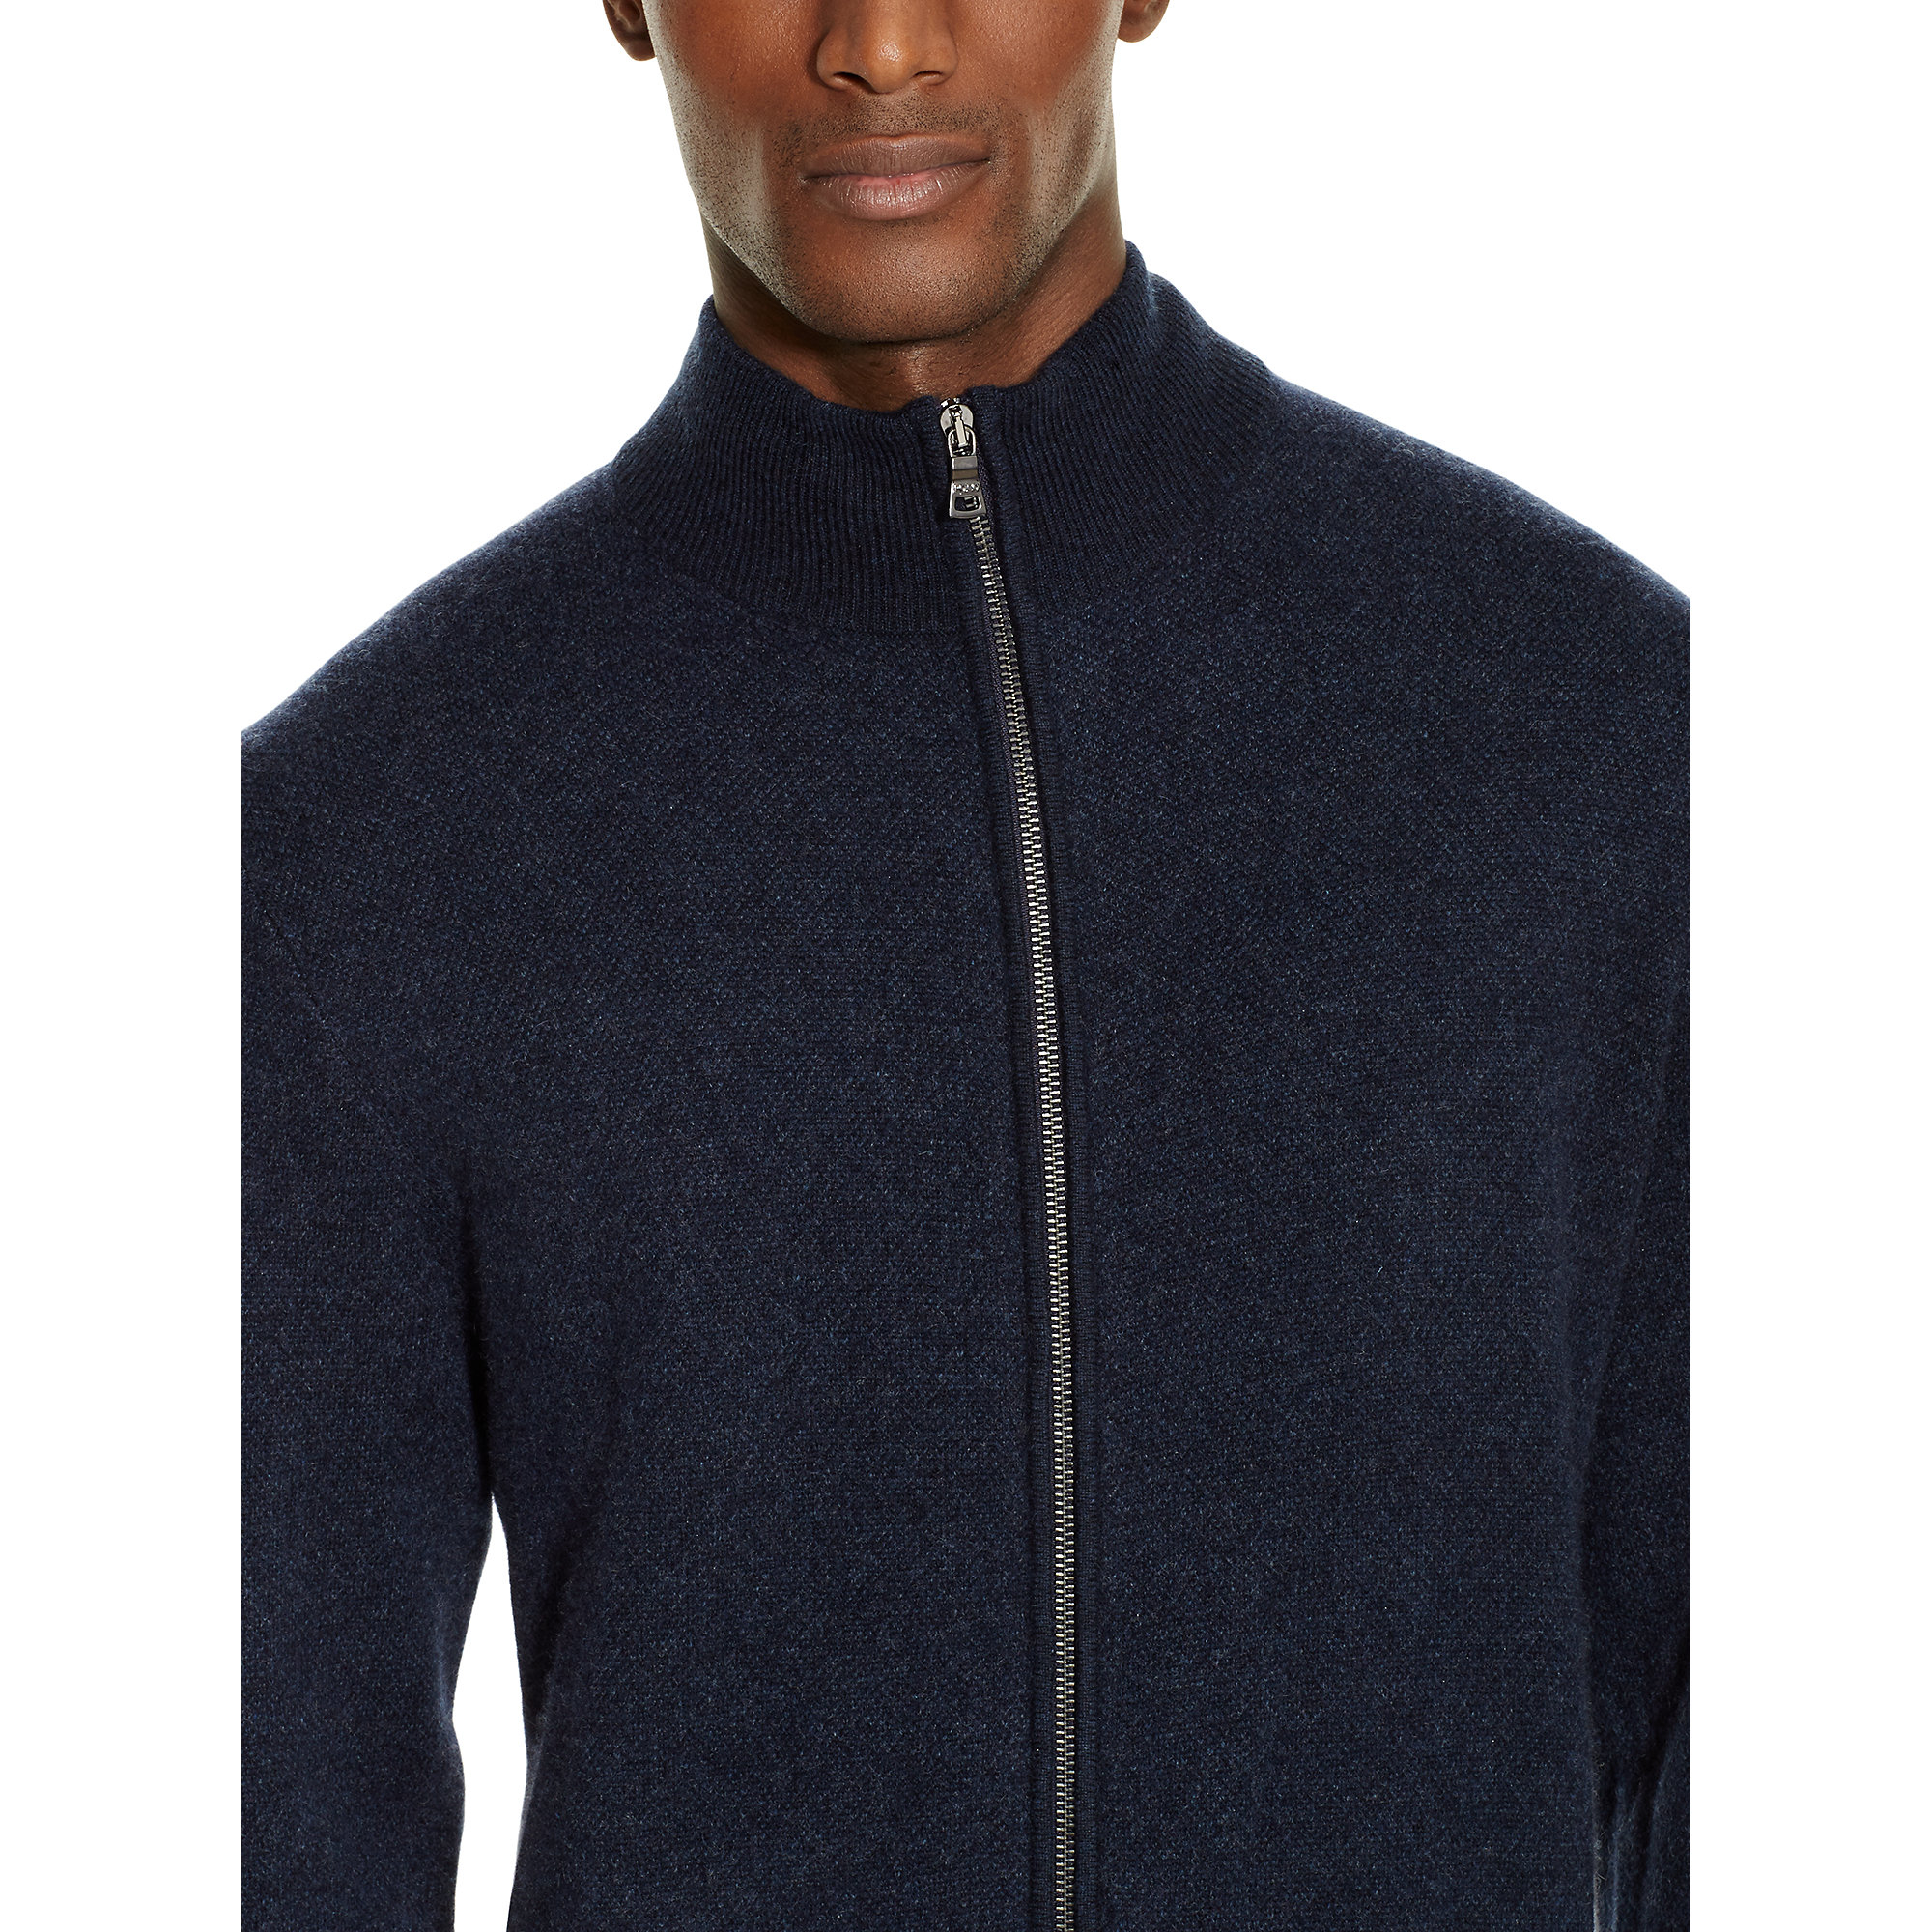 Lyst - Polo Ralph Lauren Cashmere Full-zip Sweater in Blue for Men